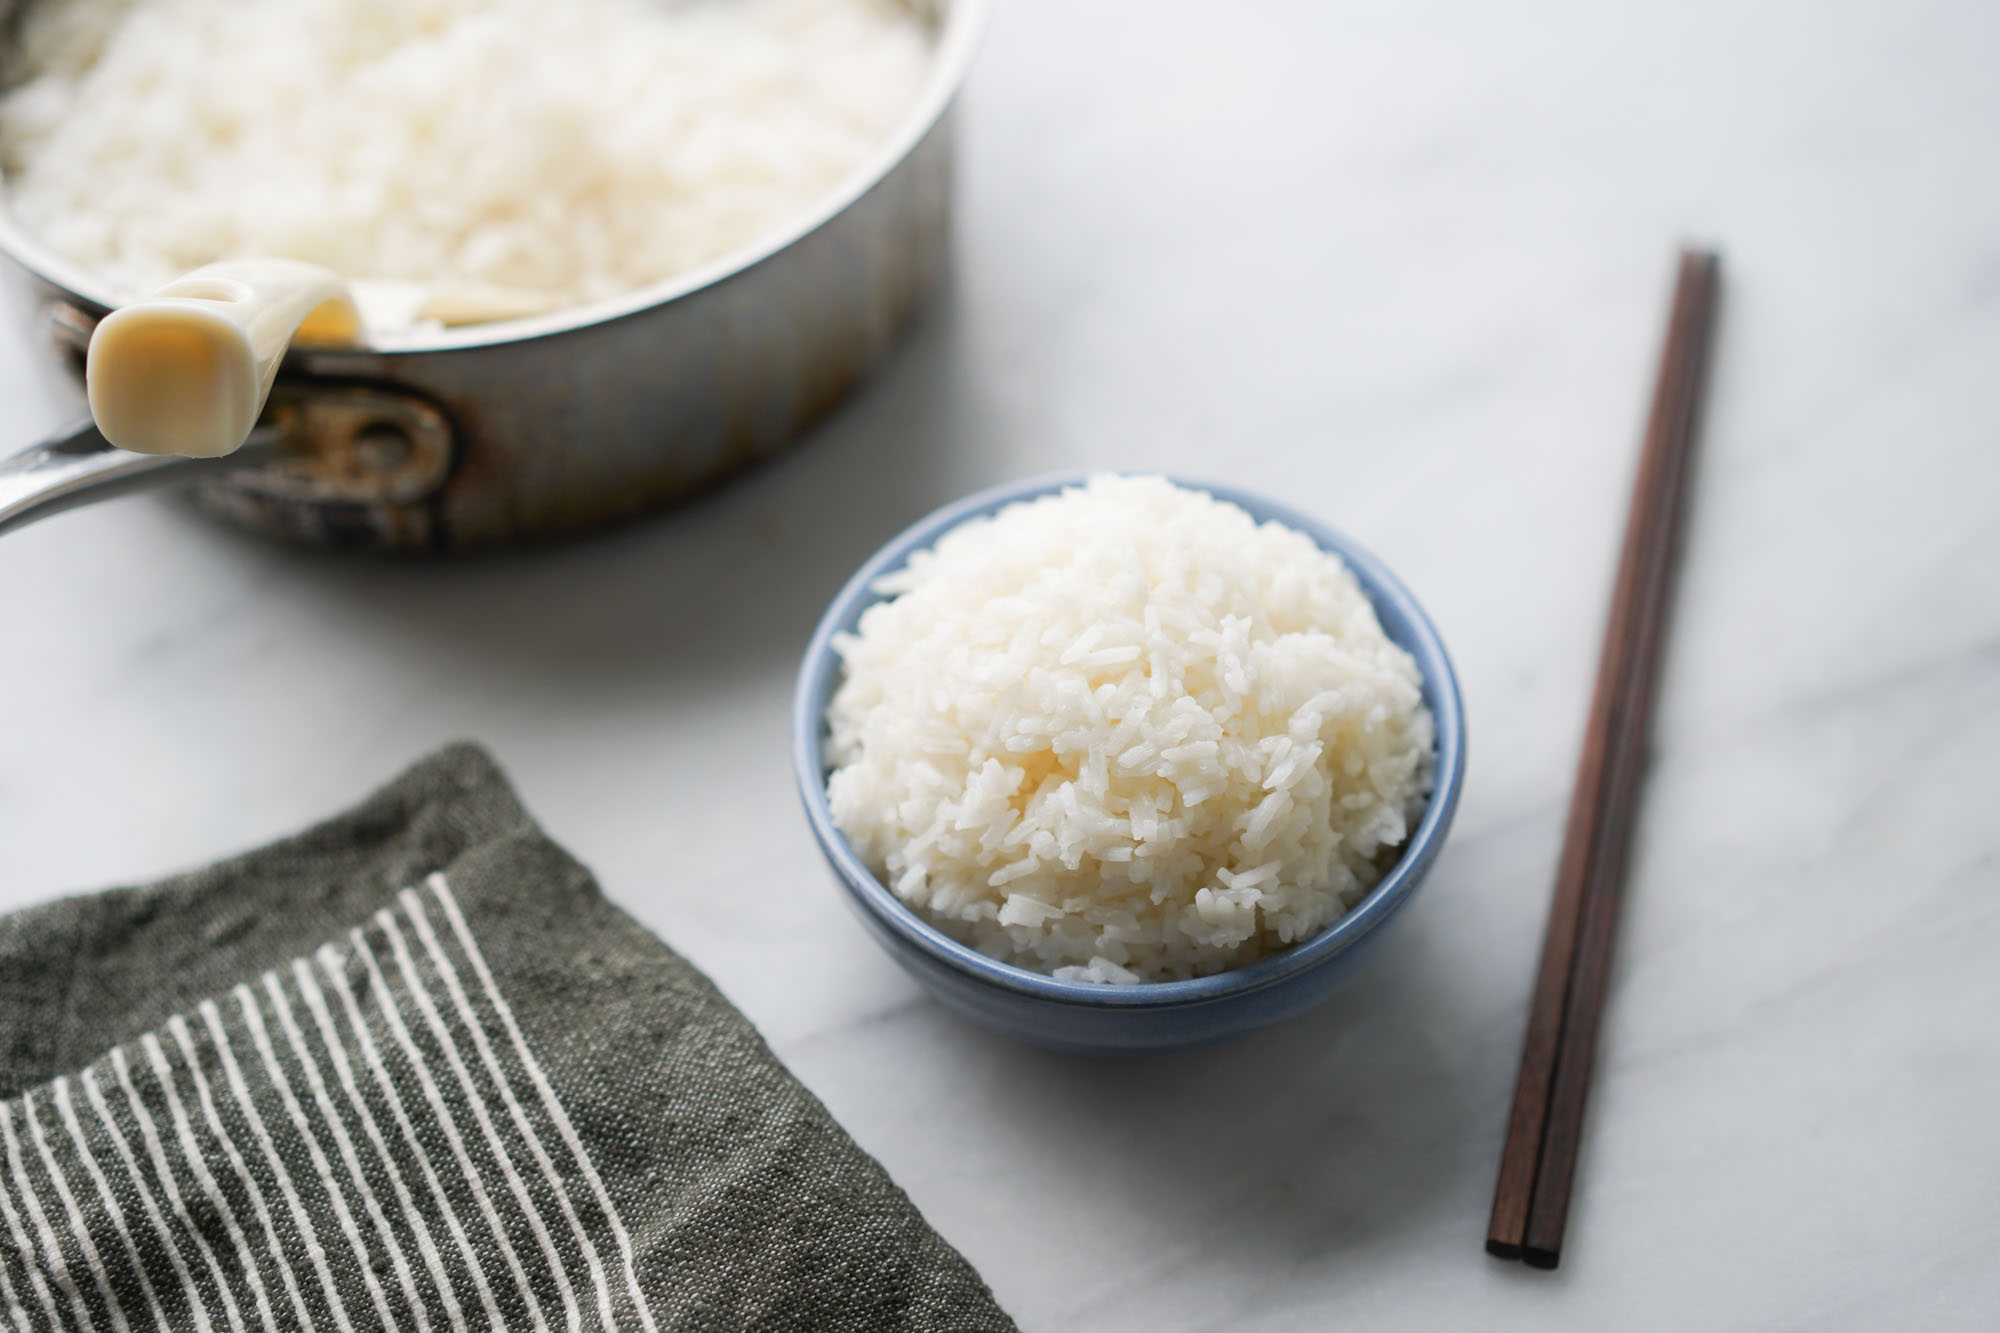 https://www.hungryhuy.com/wp-content/uploads/jasmine-rice-bowl.jpg